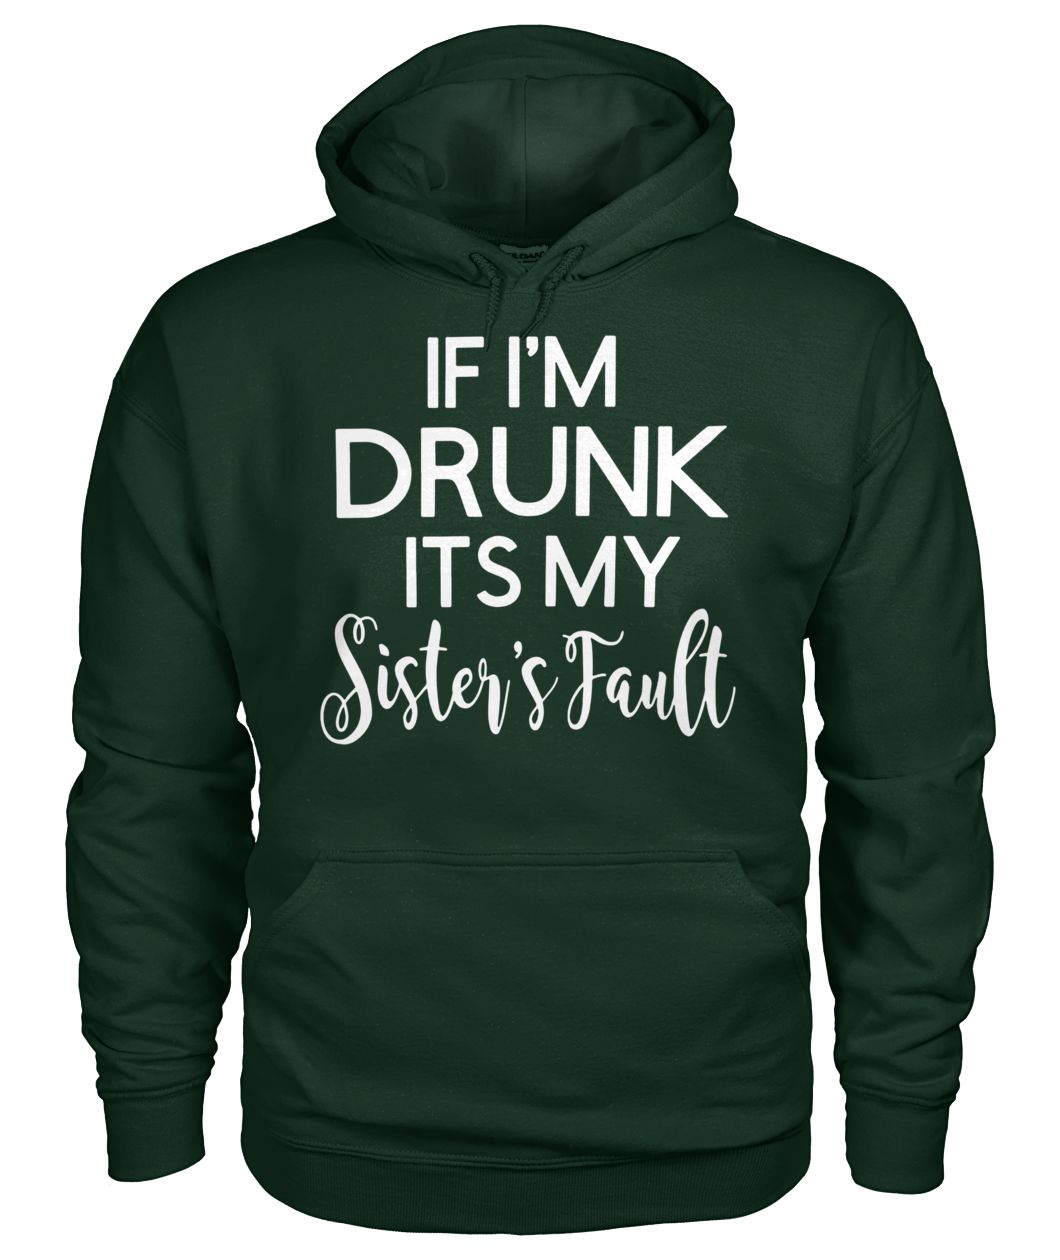 If I'm drunk it's my sister's fault gildan hoodie